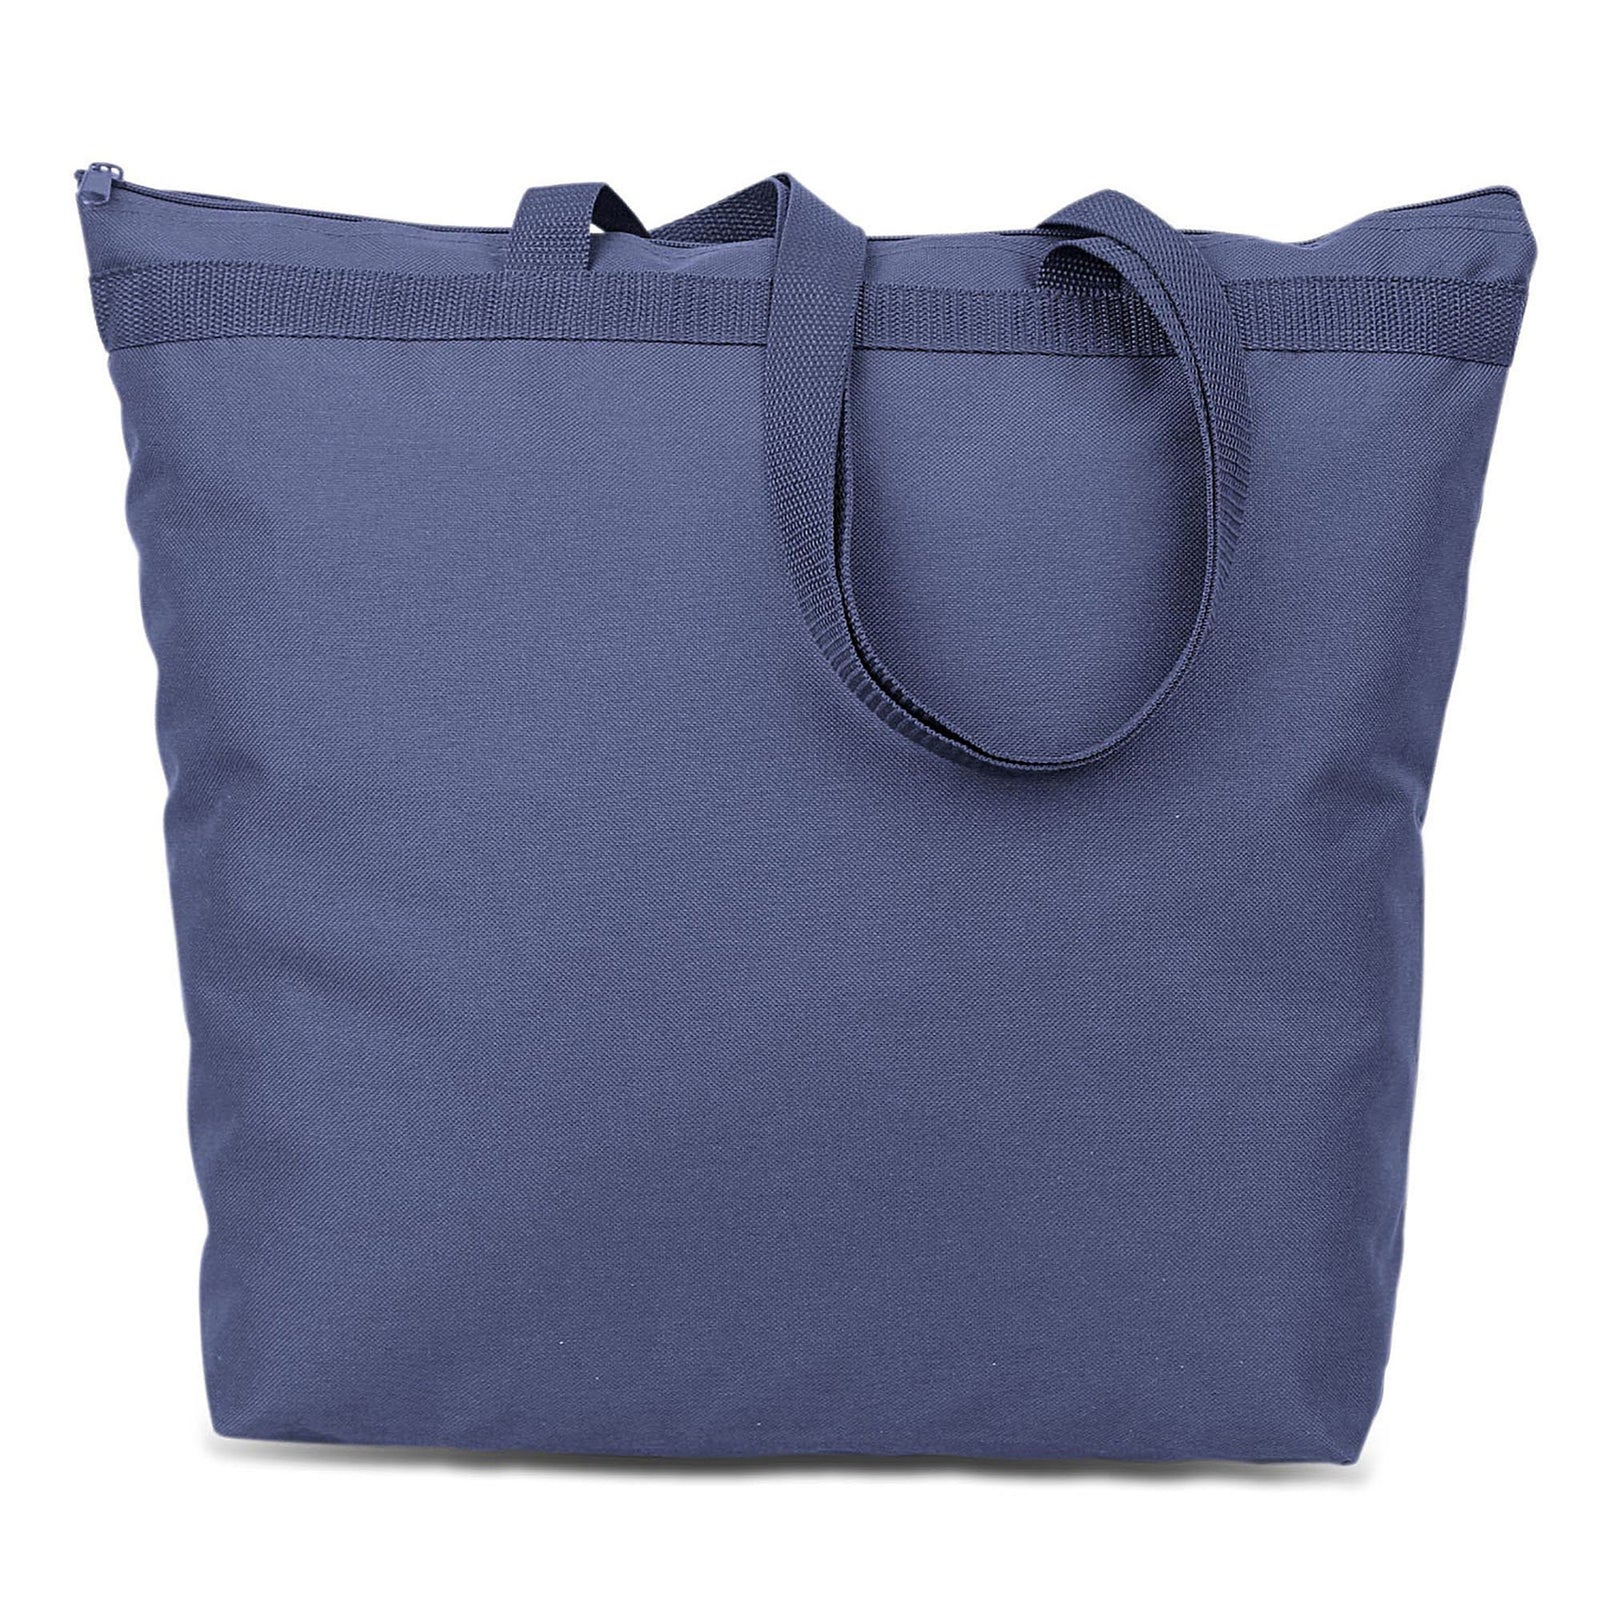 Super Teacher Tote Bag - Large Canvas Zipper Bag - Teacher Appreciation Custom Christmas Gift